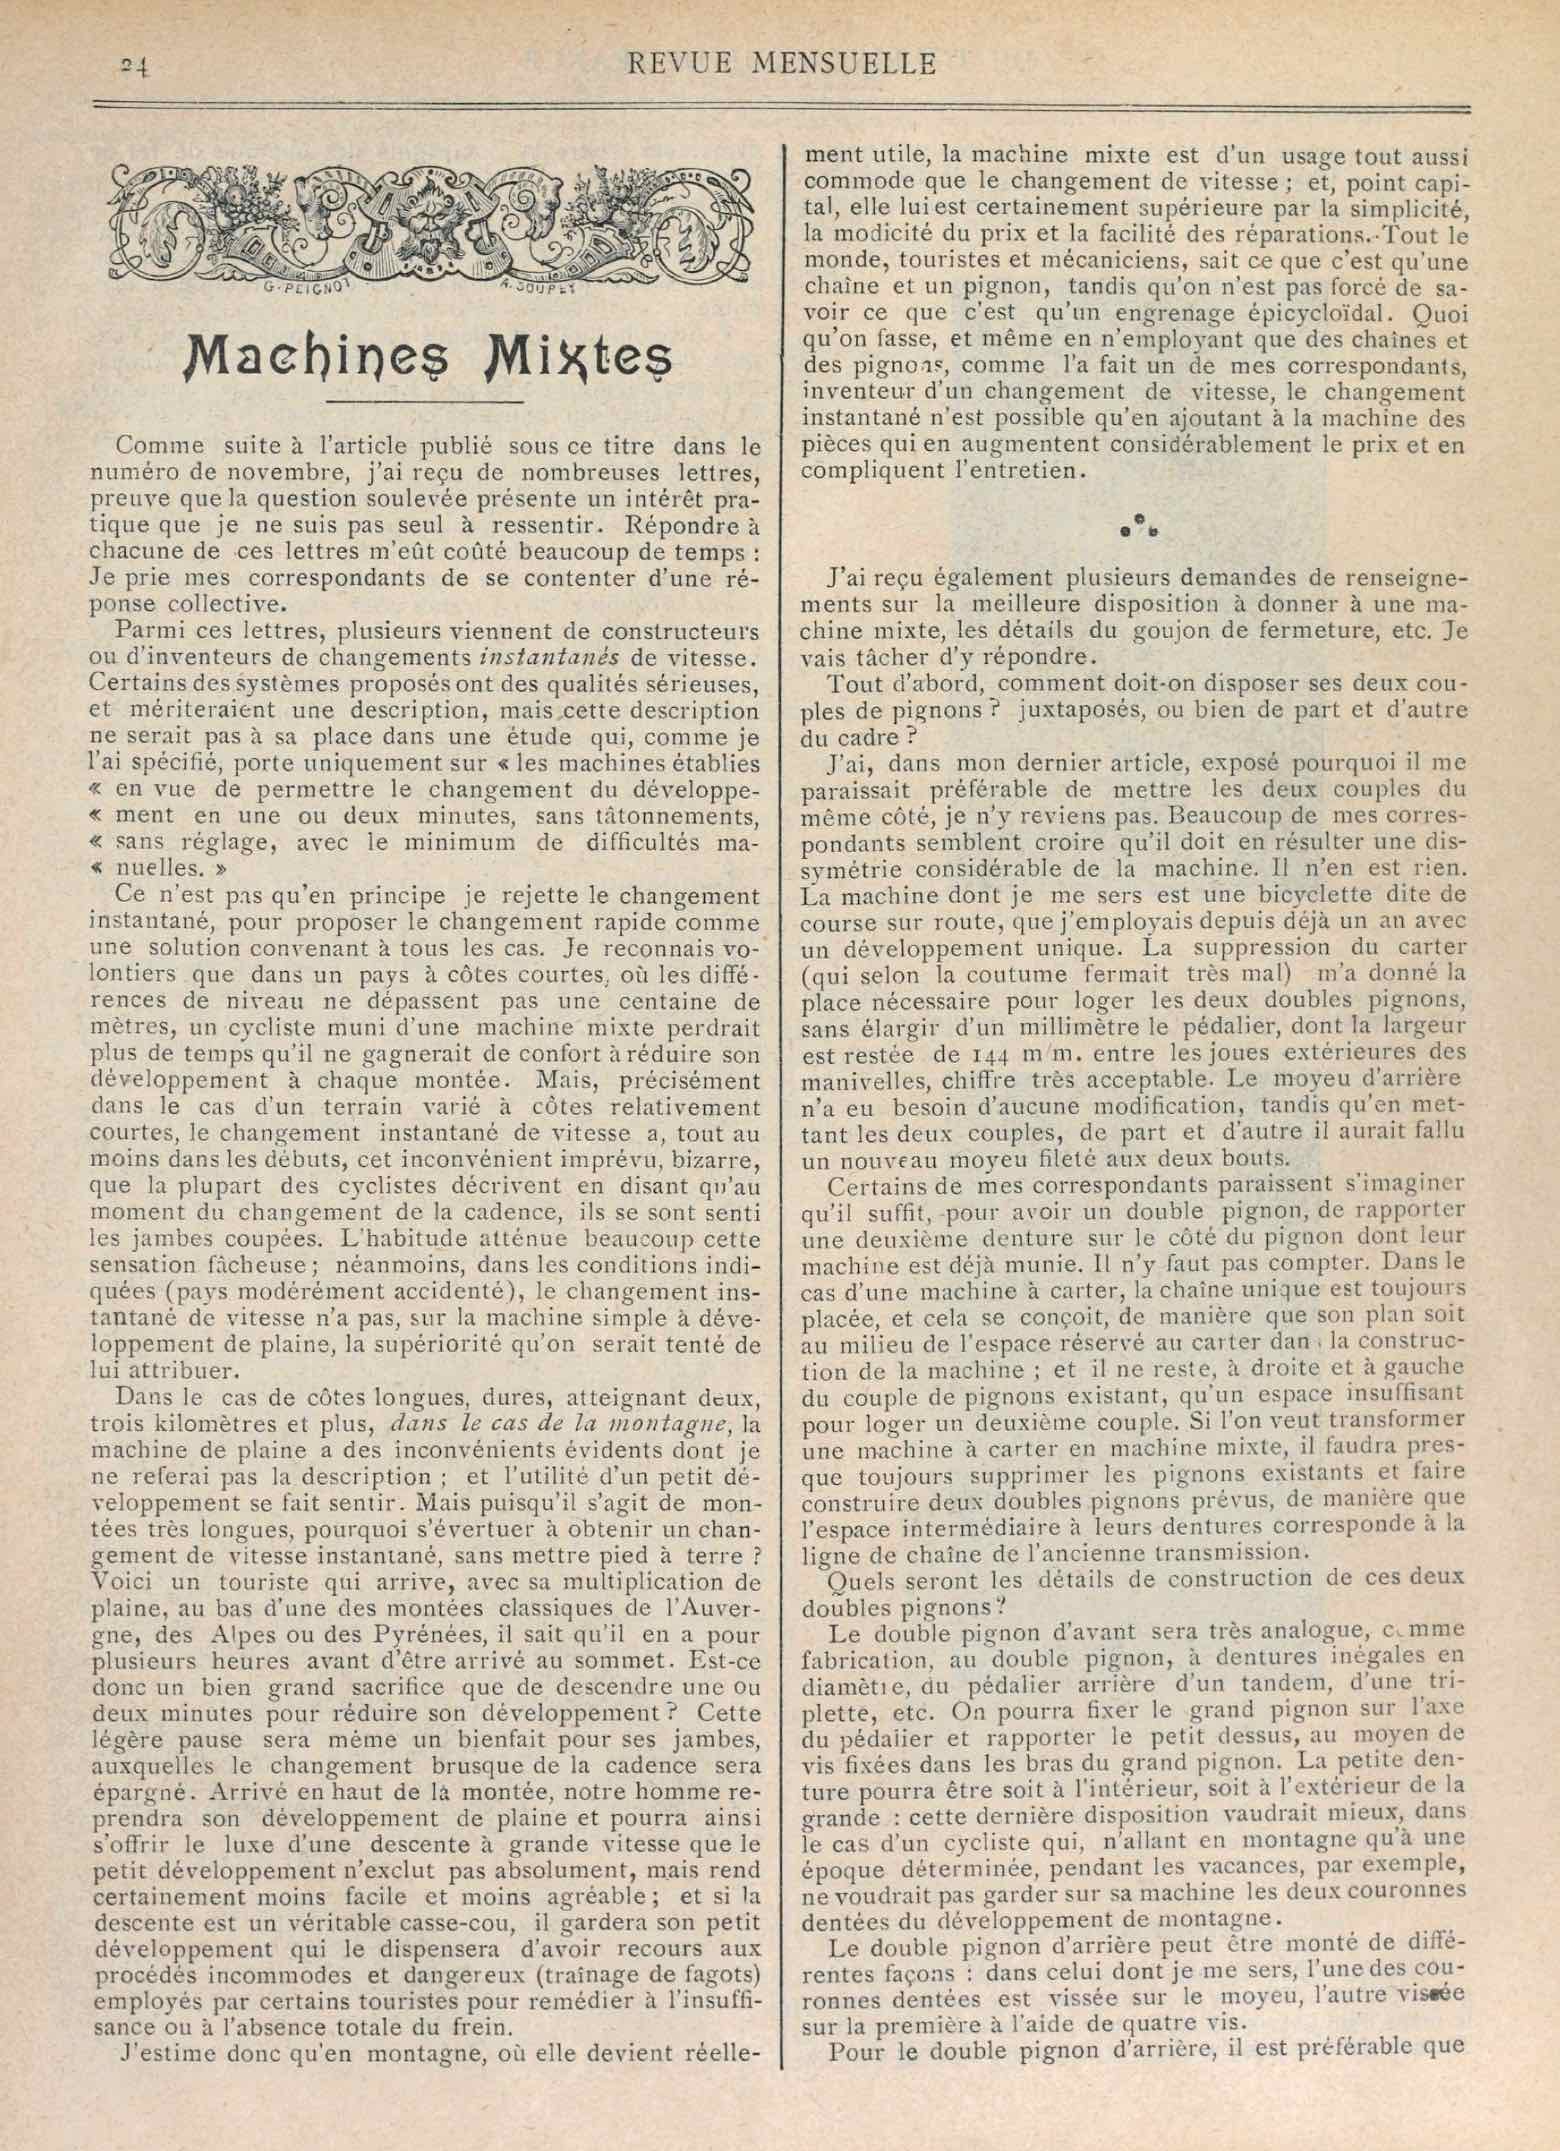 T.C.F. Revue Mensuelle January 1898 - Machines Mixtes (part II) scan 1 main image